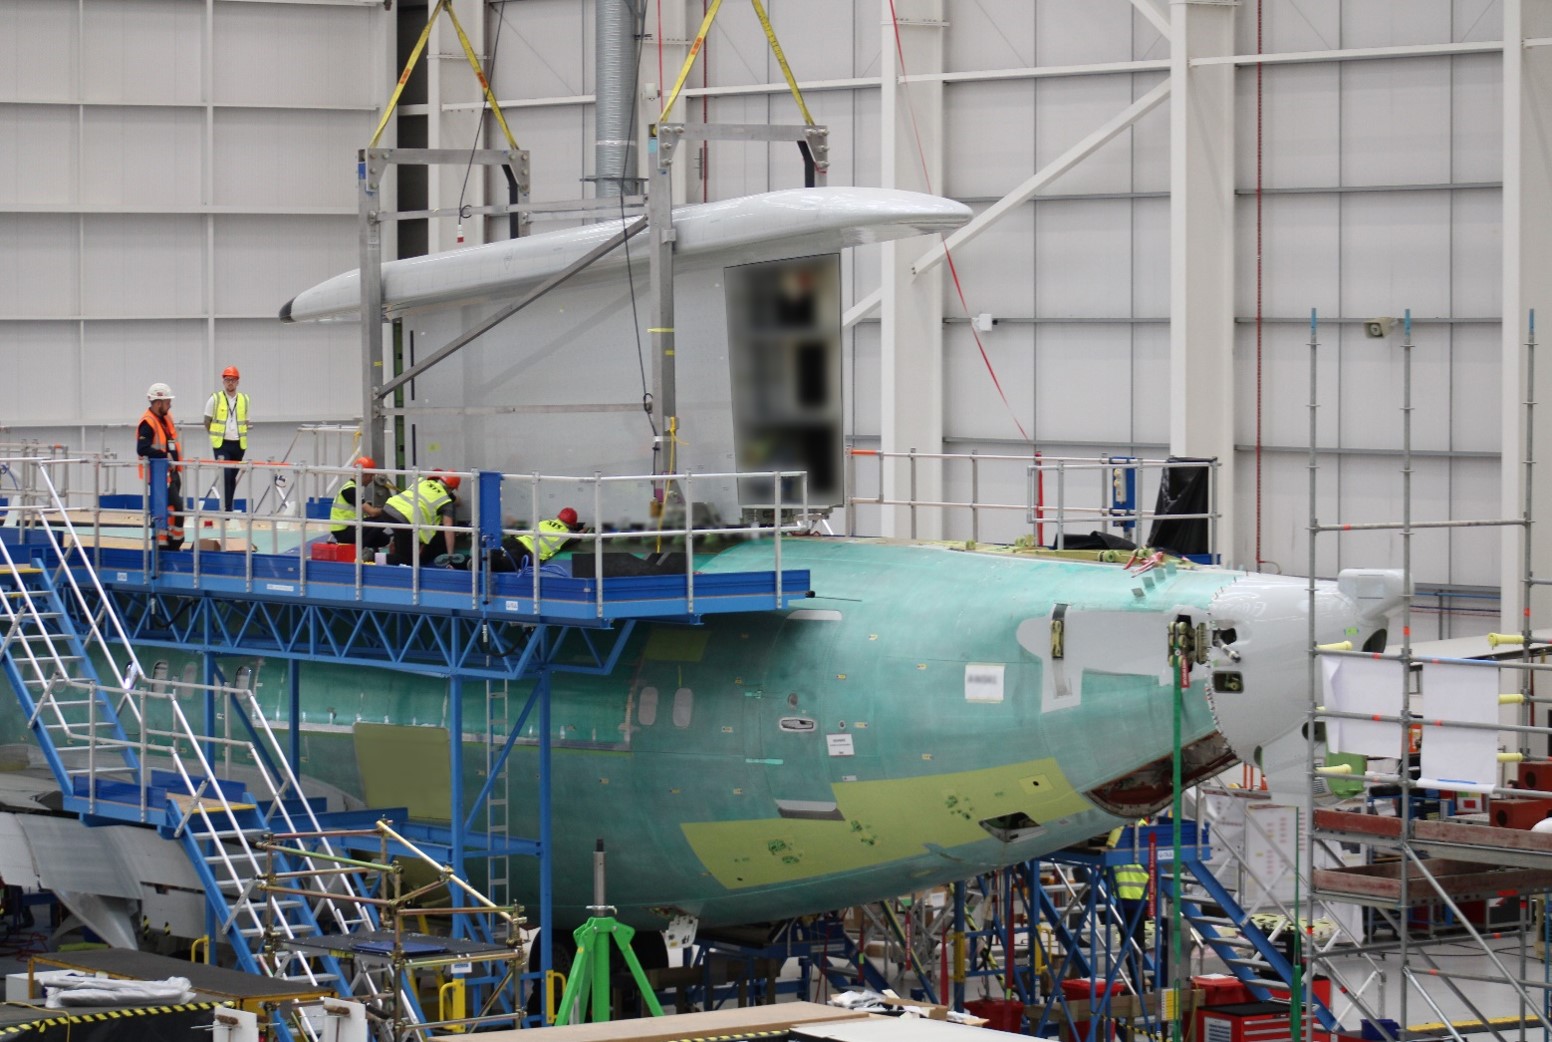 Image shows aircraft parts being assembled inside hangar.